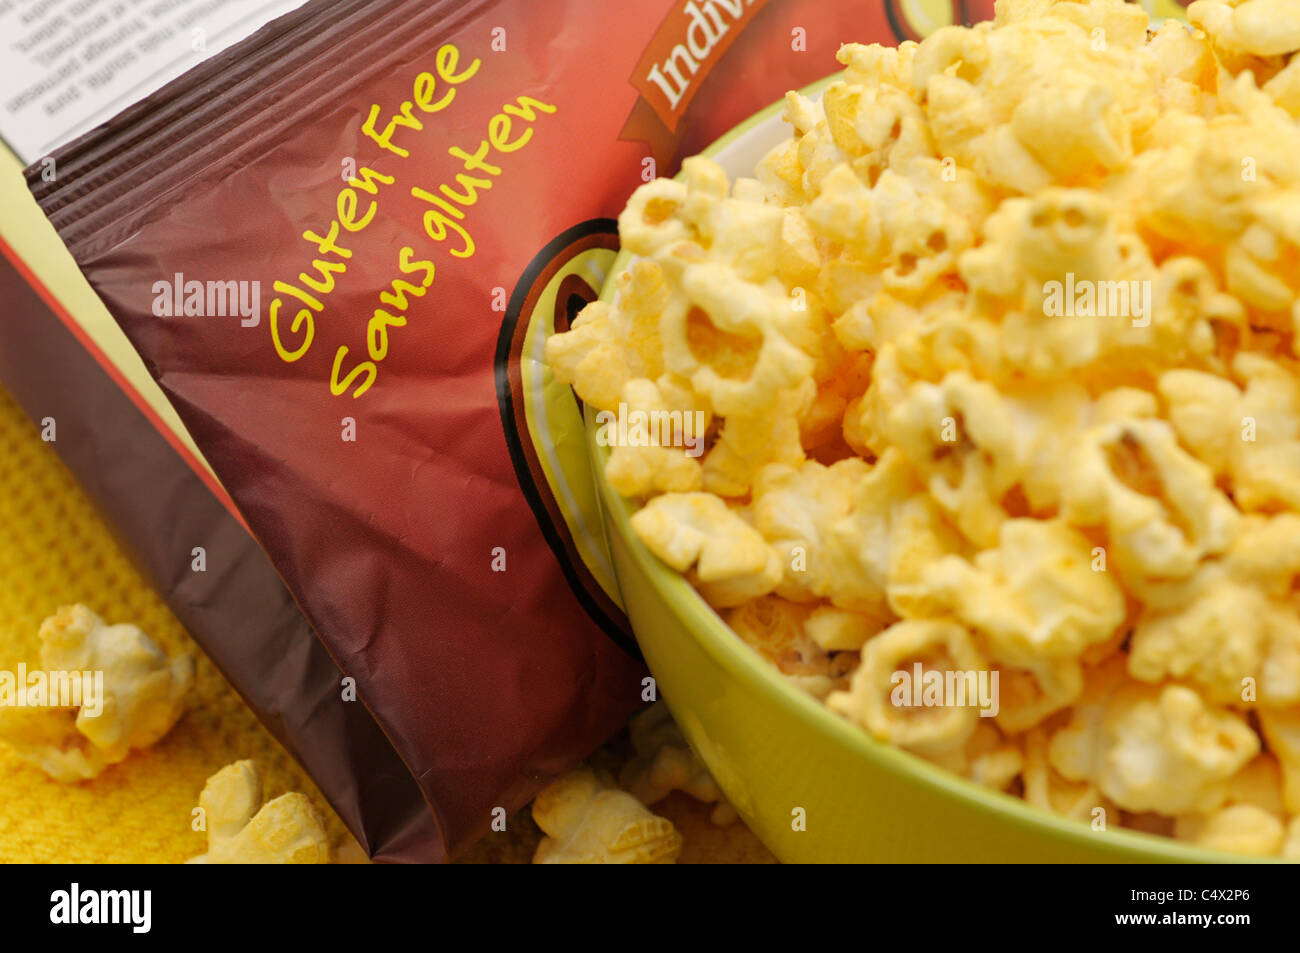 Gluten Free Food Products, Popcorn Stock Photo